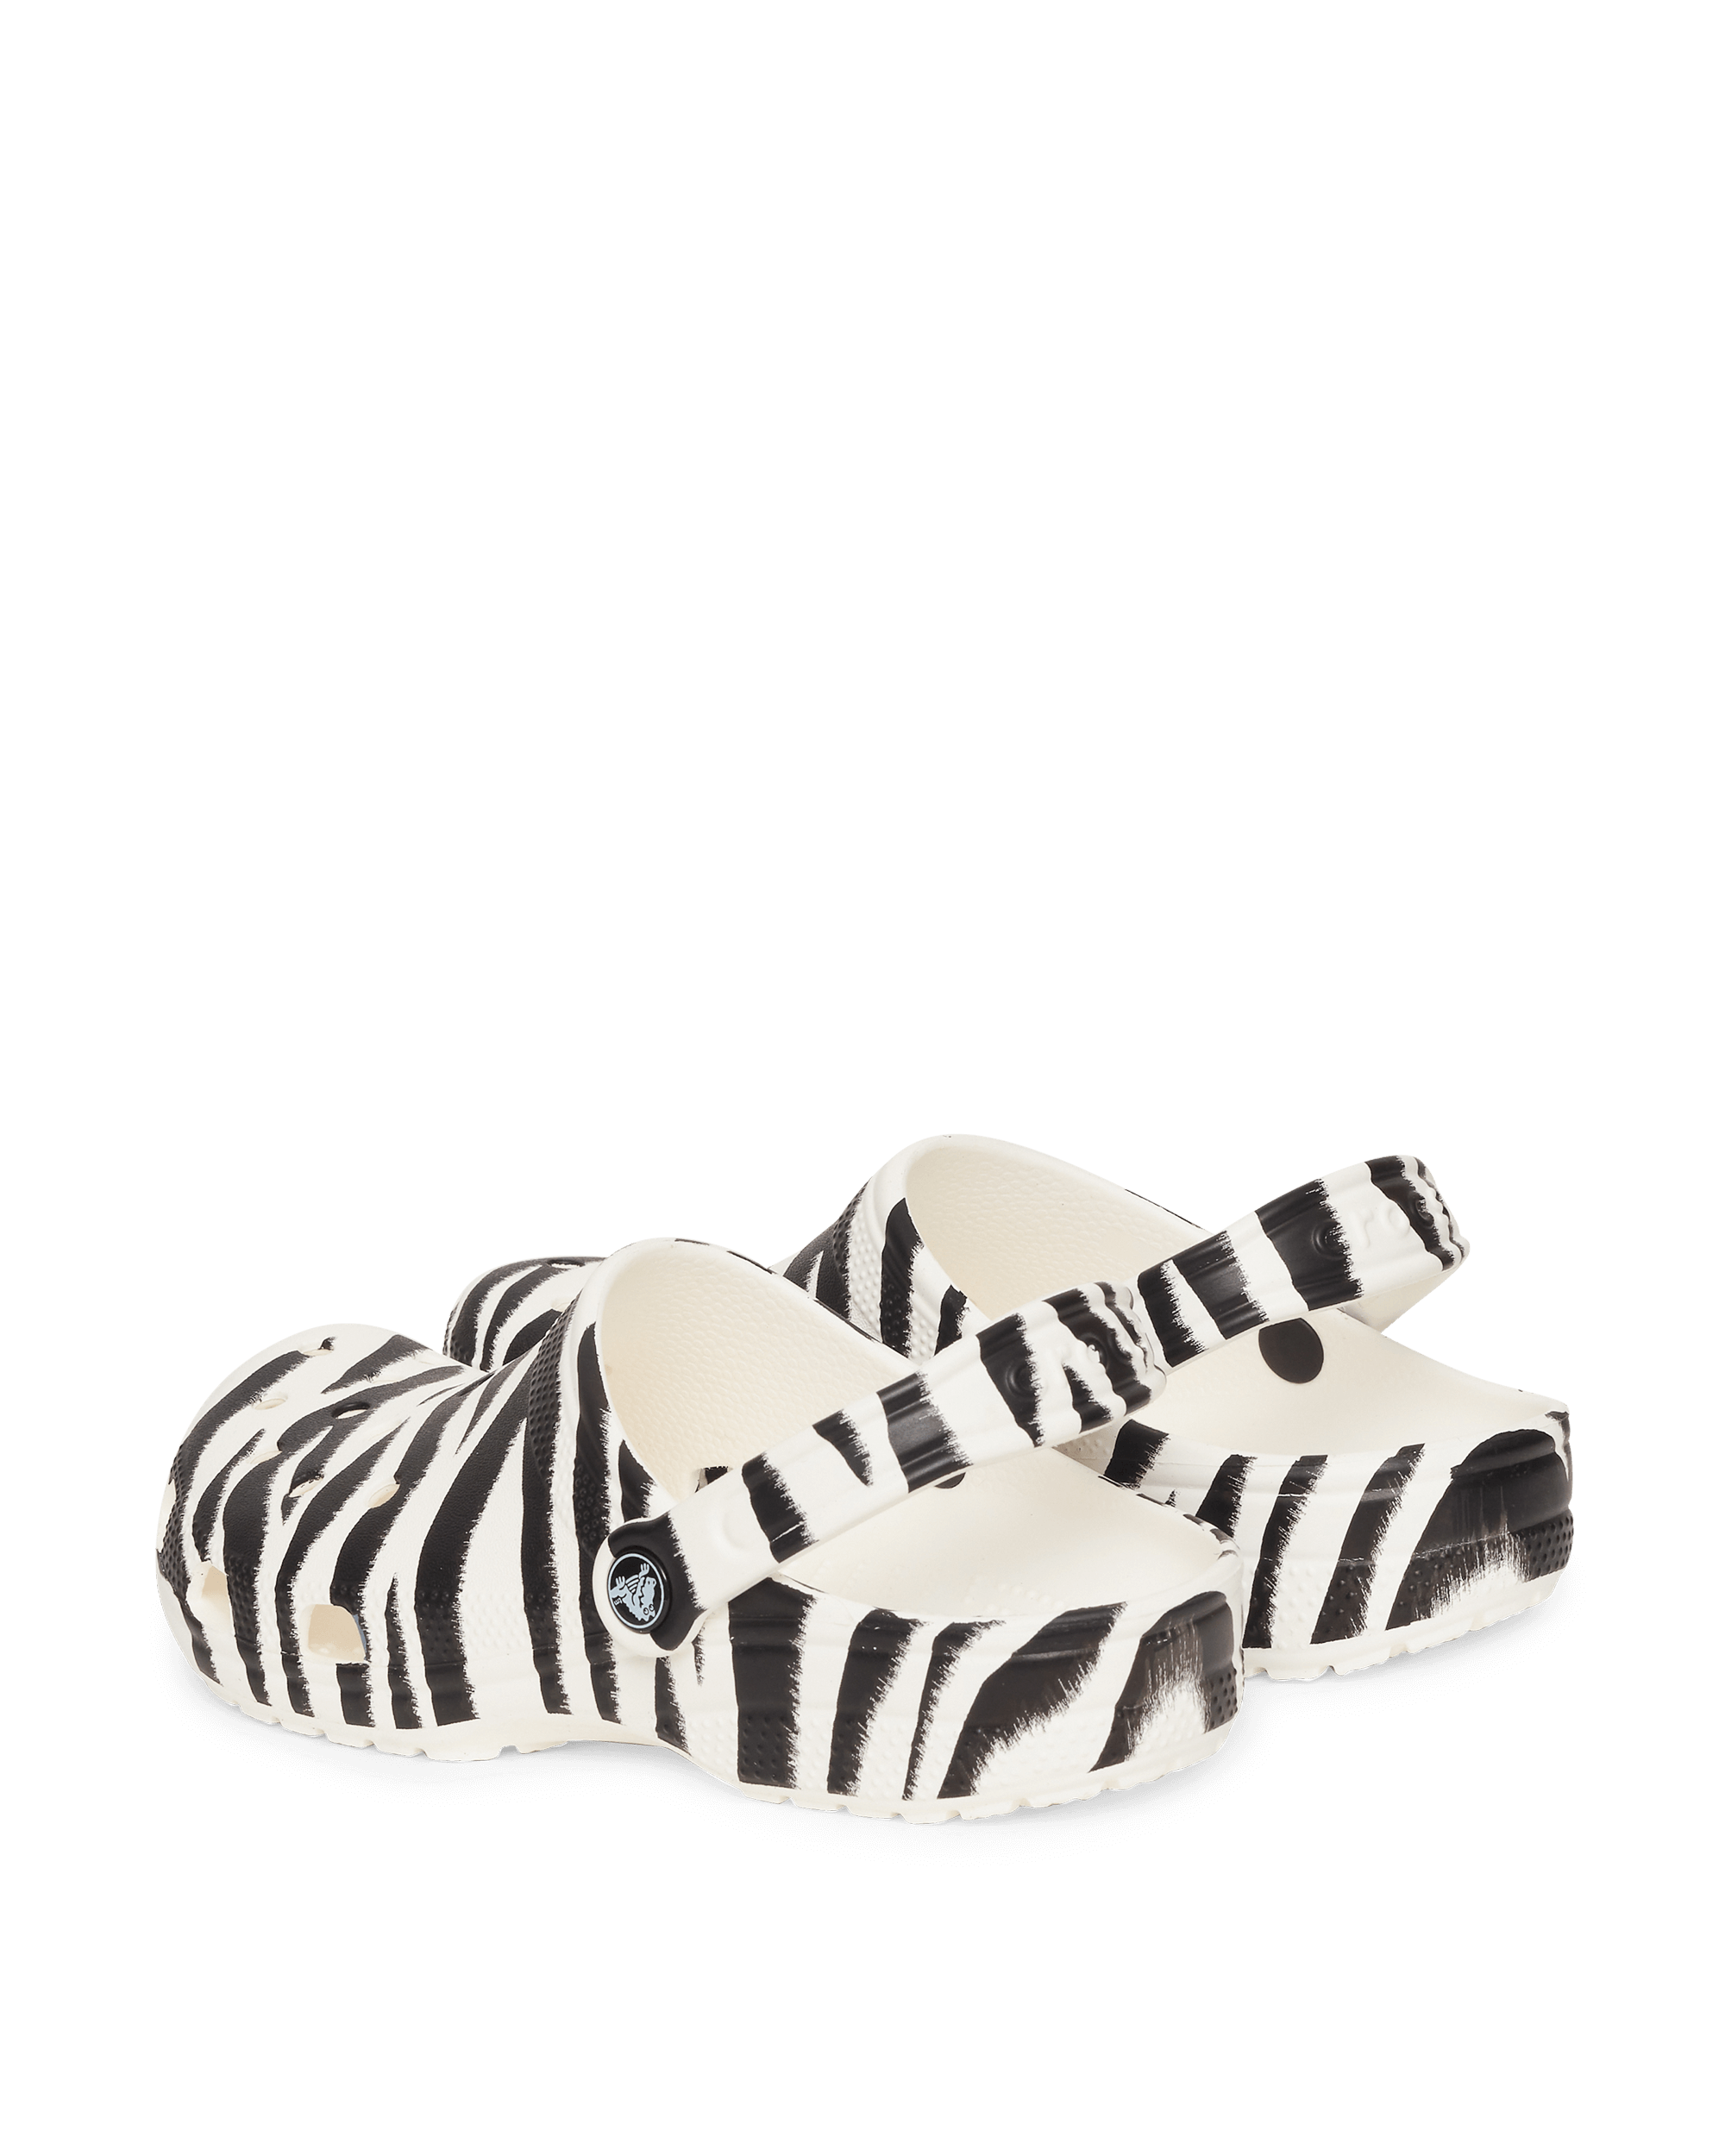 Crocs Wmns Classic Animal White/Zebra Print Sandals and Slides Sandal S21CR206676 WHZP